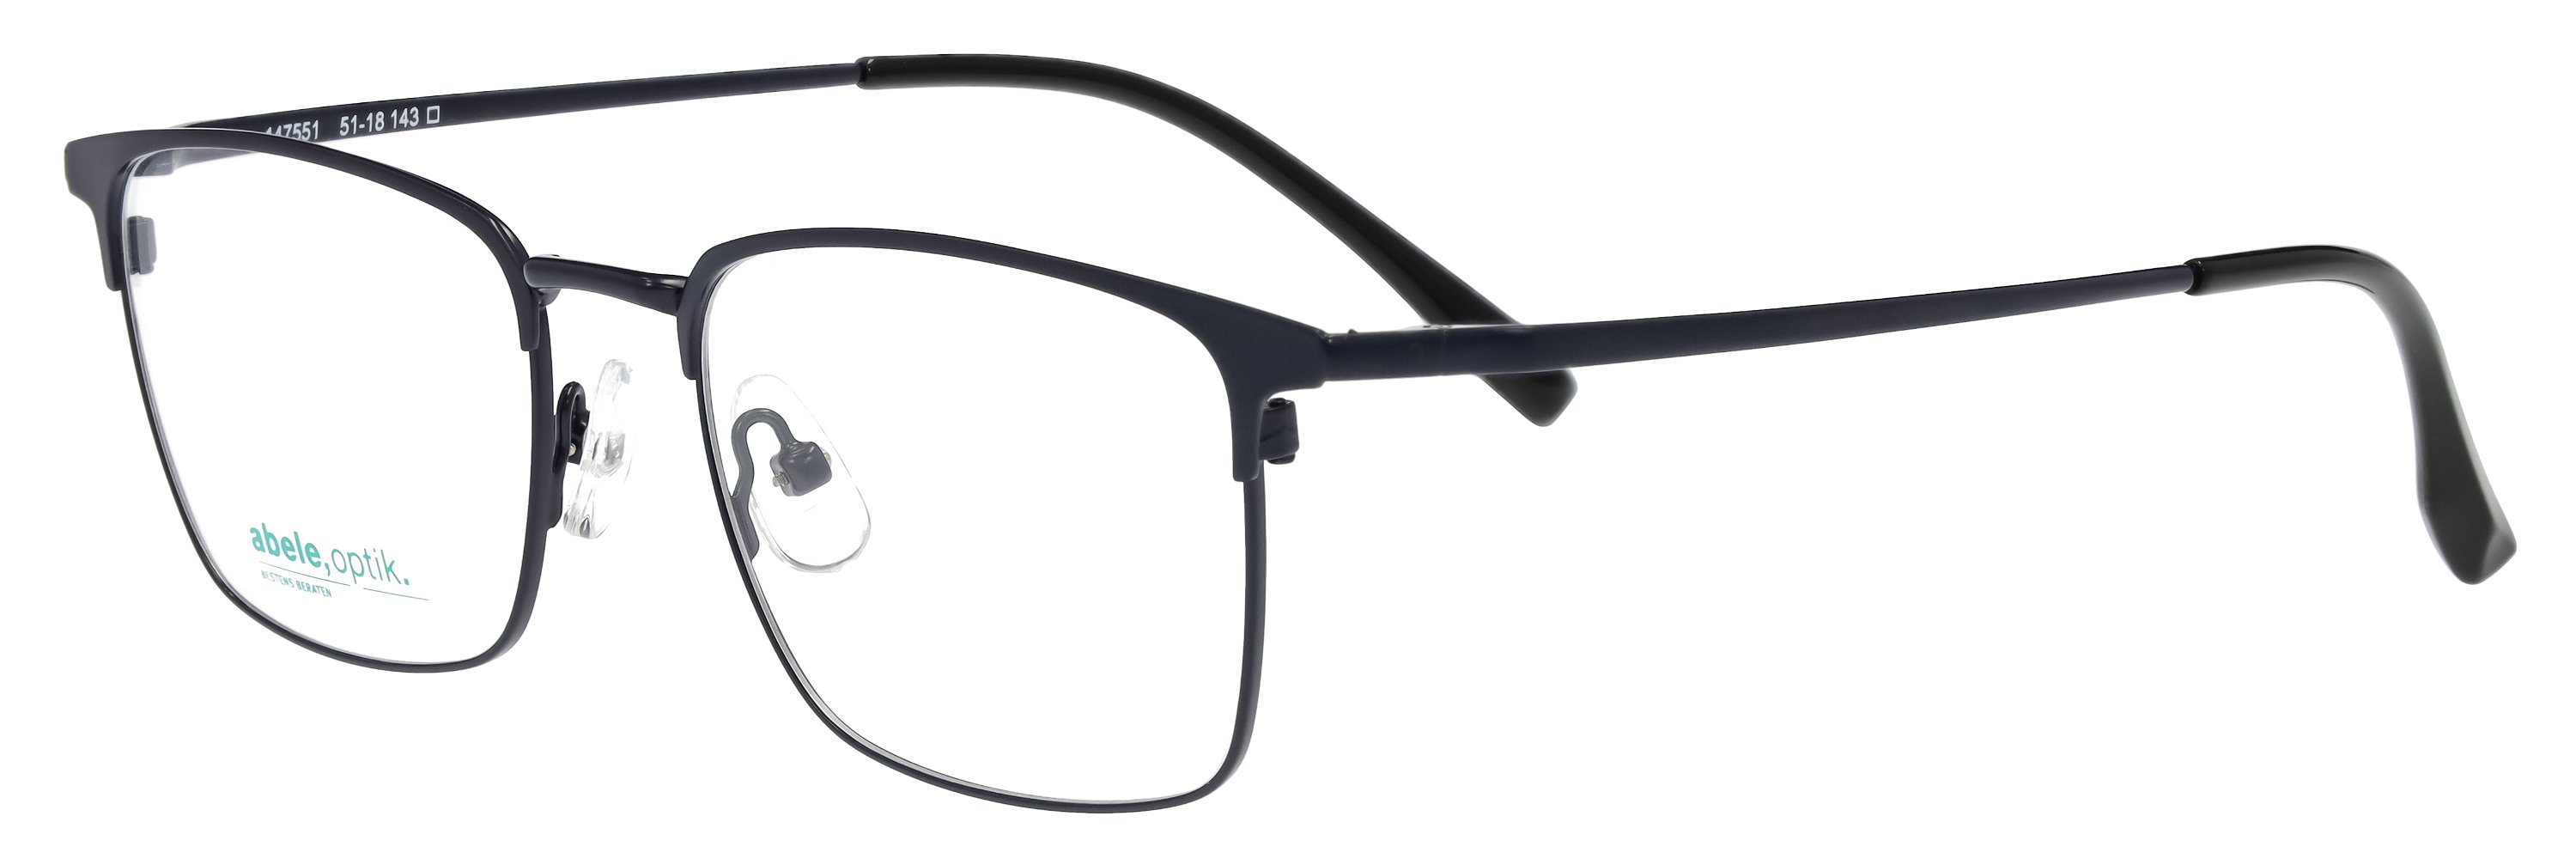 abele optik Brille für Herren in dunkelblau 147551